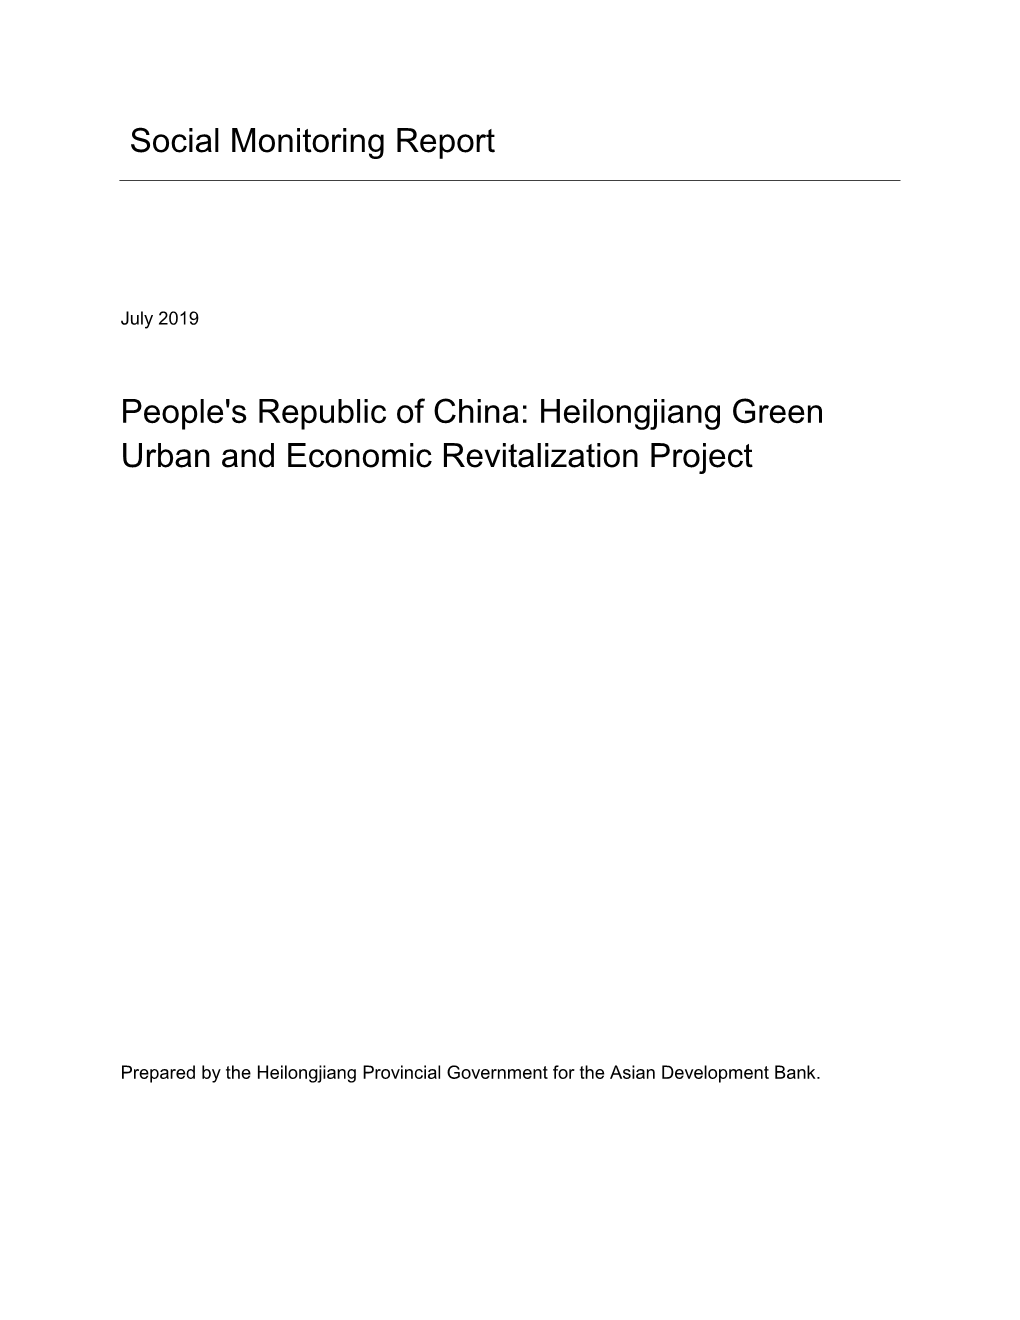 Heilongjiang Green Urban and Economic Revitalization Project